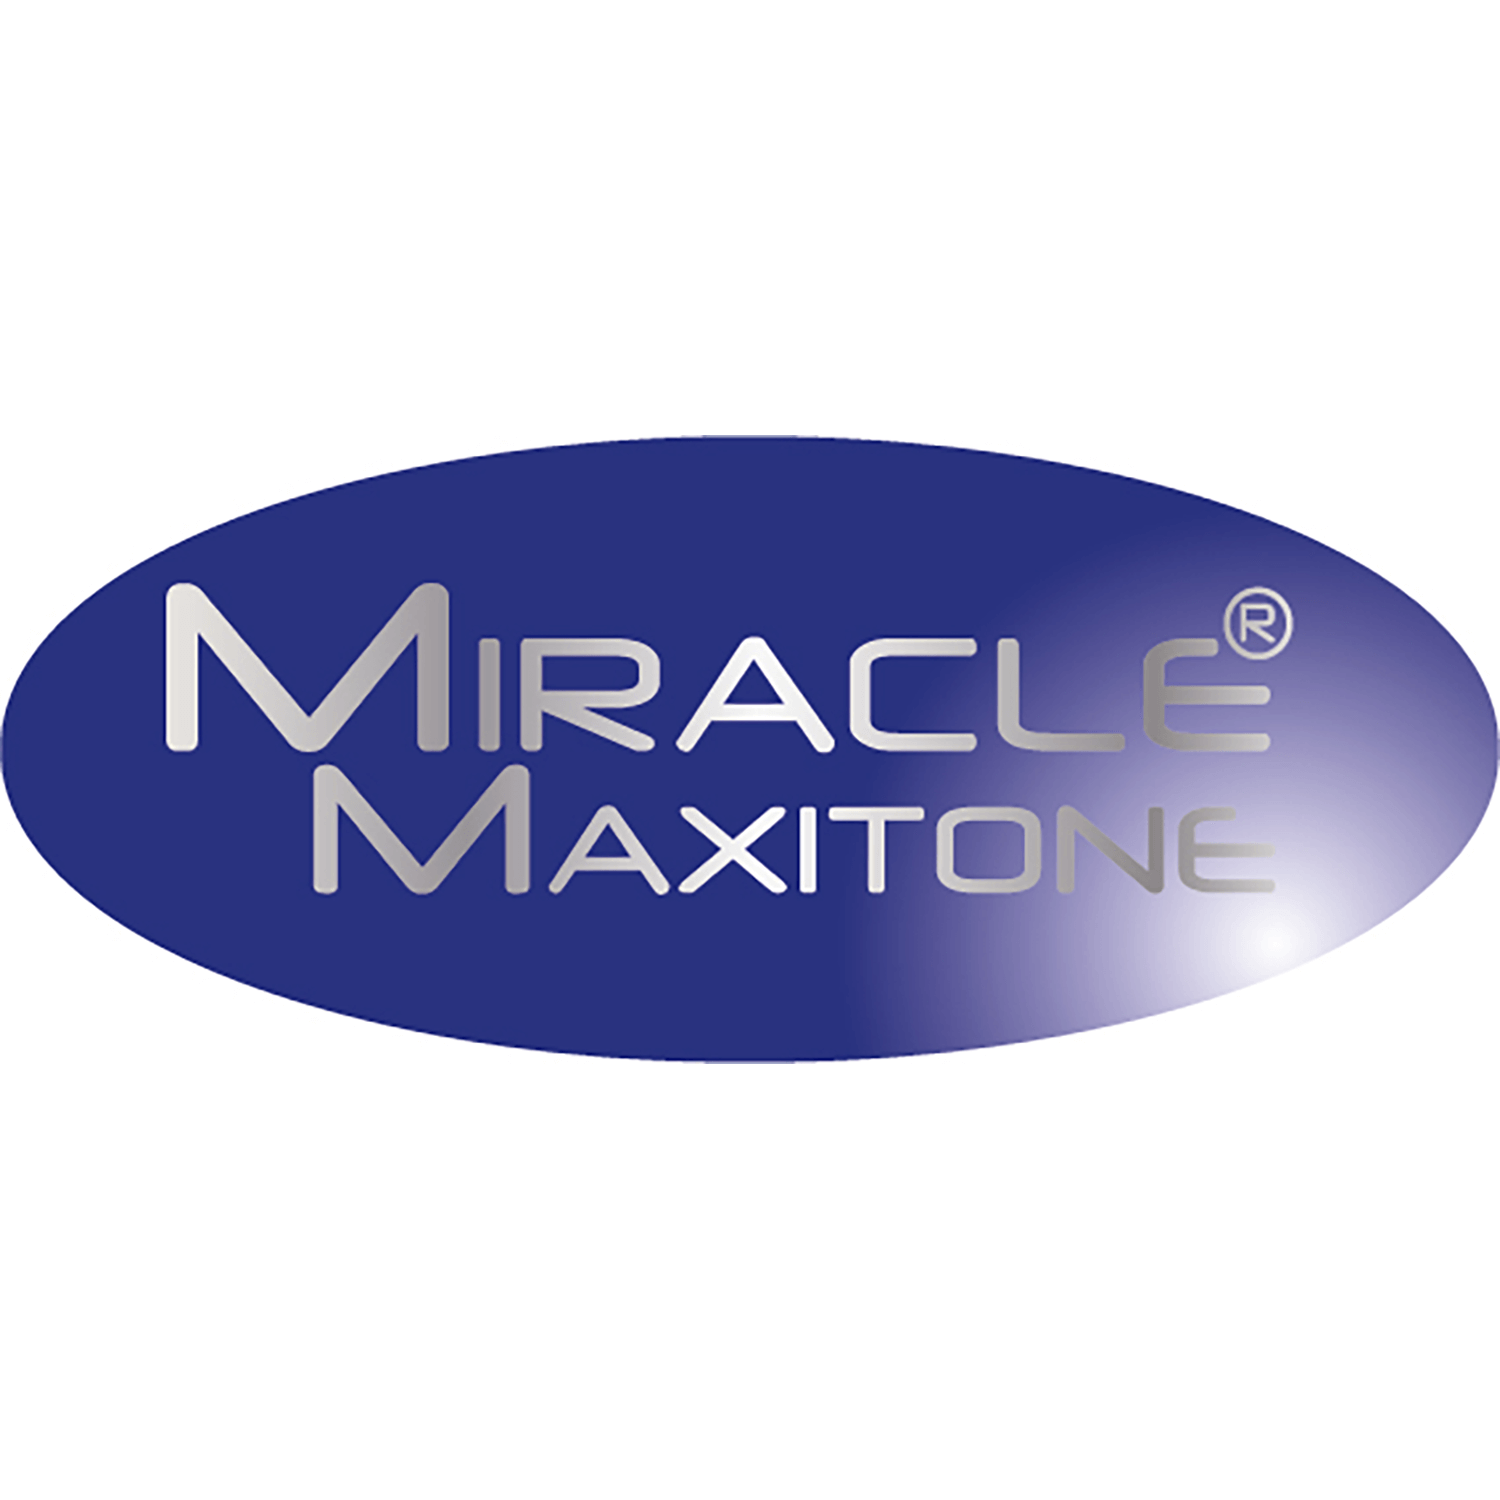 Miracle Maxitone